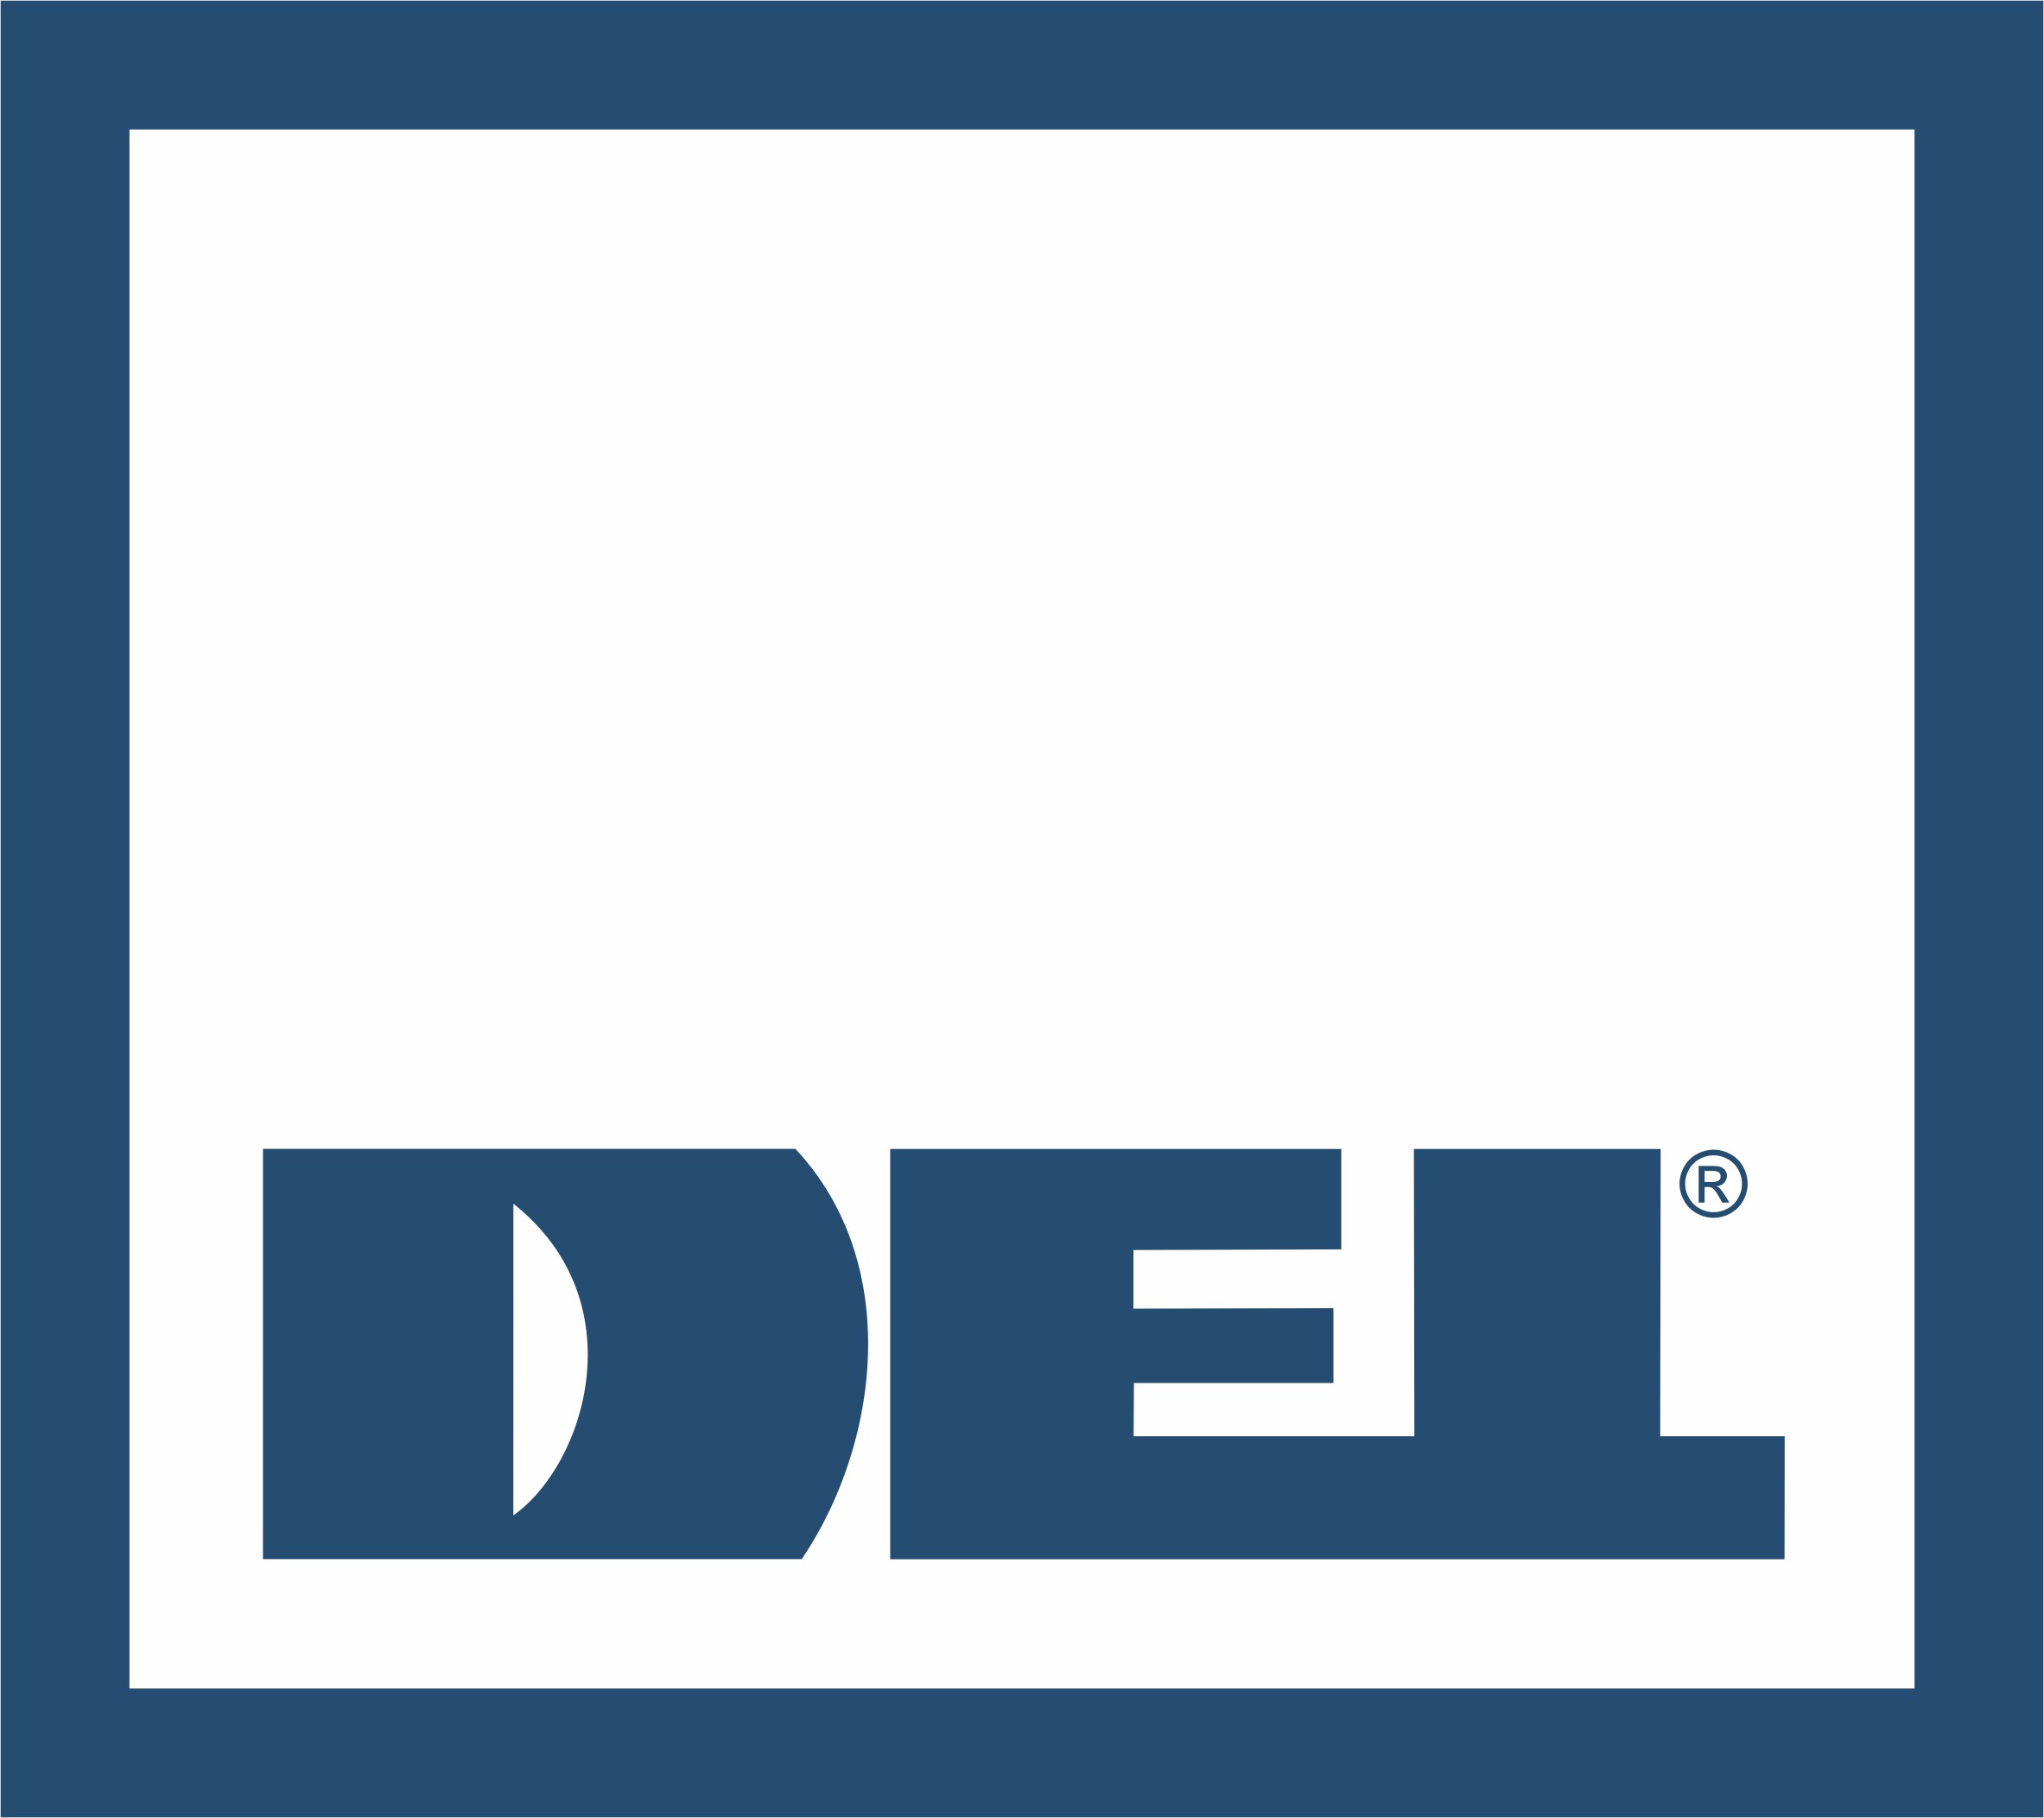 Logo DEL